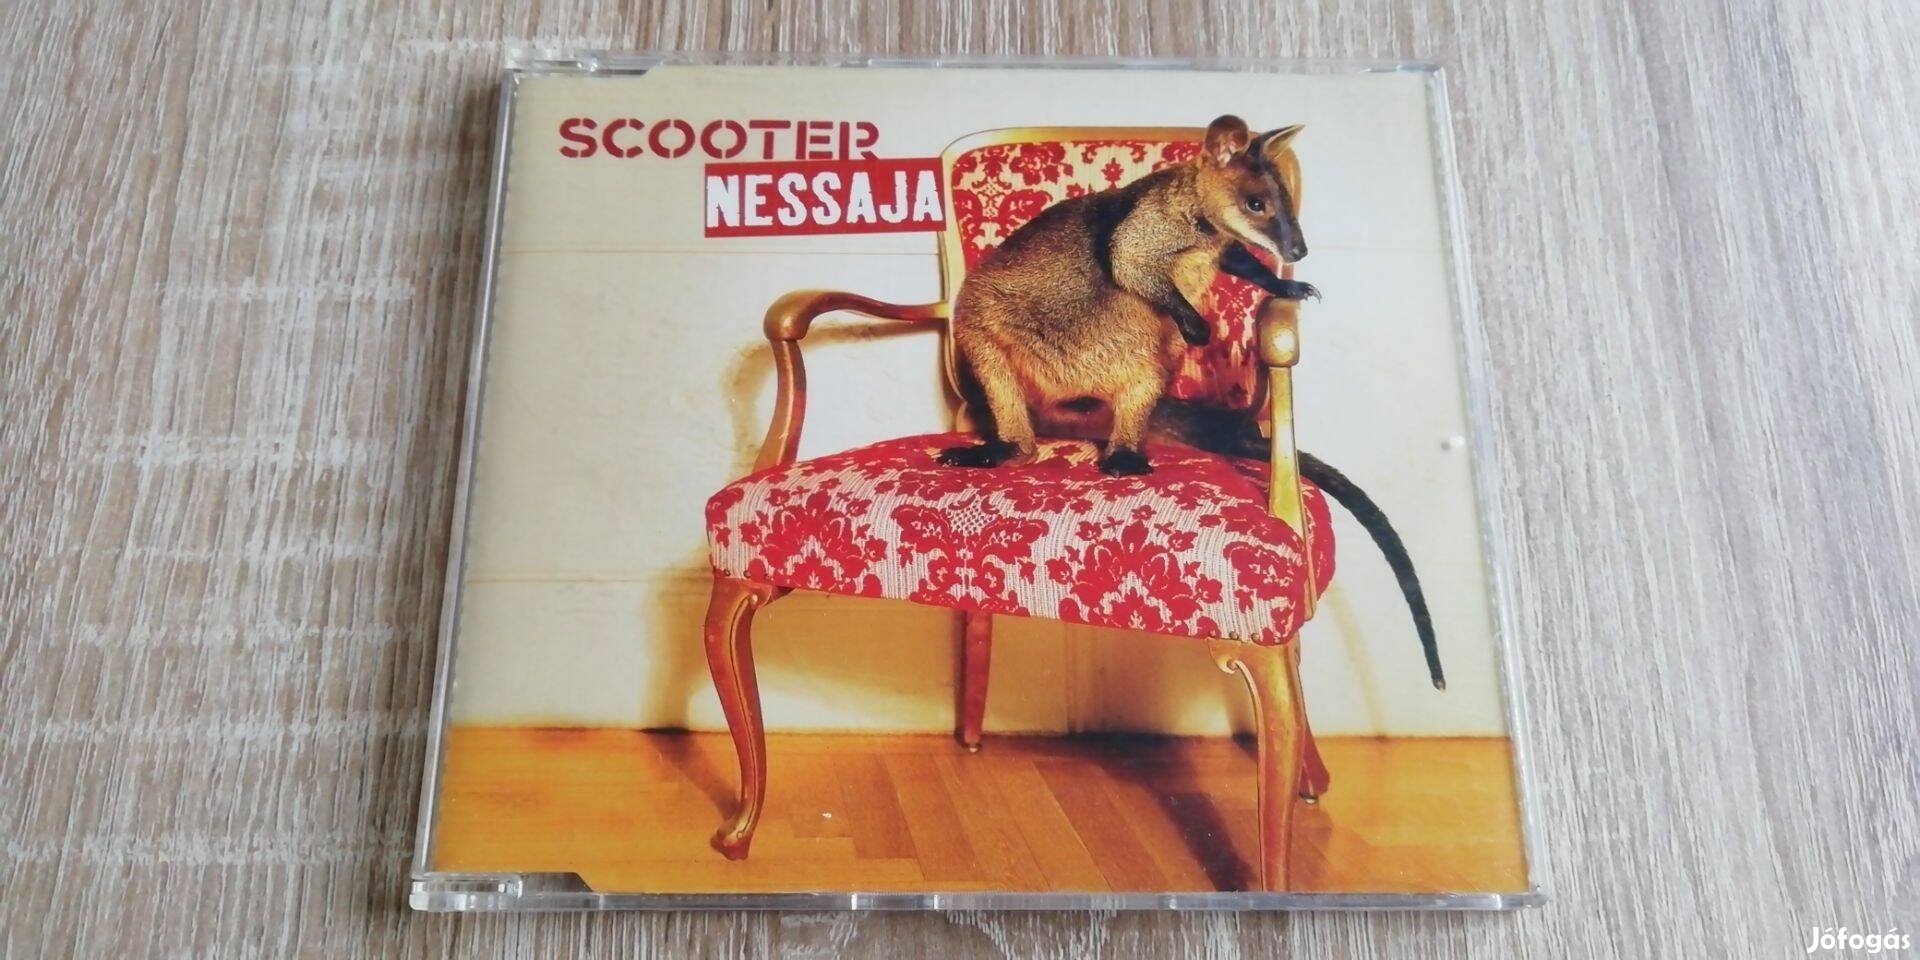 Scooter: Nessaja - eredeti CD, újszerű, karcmentes